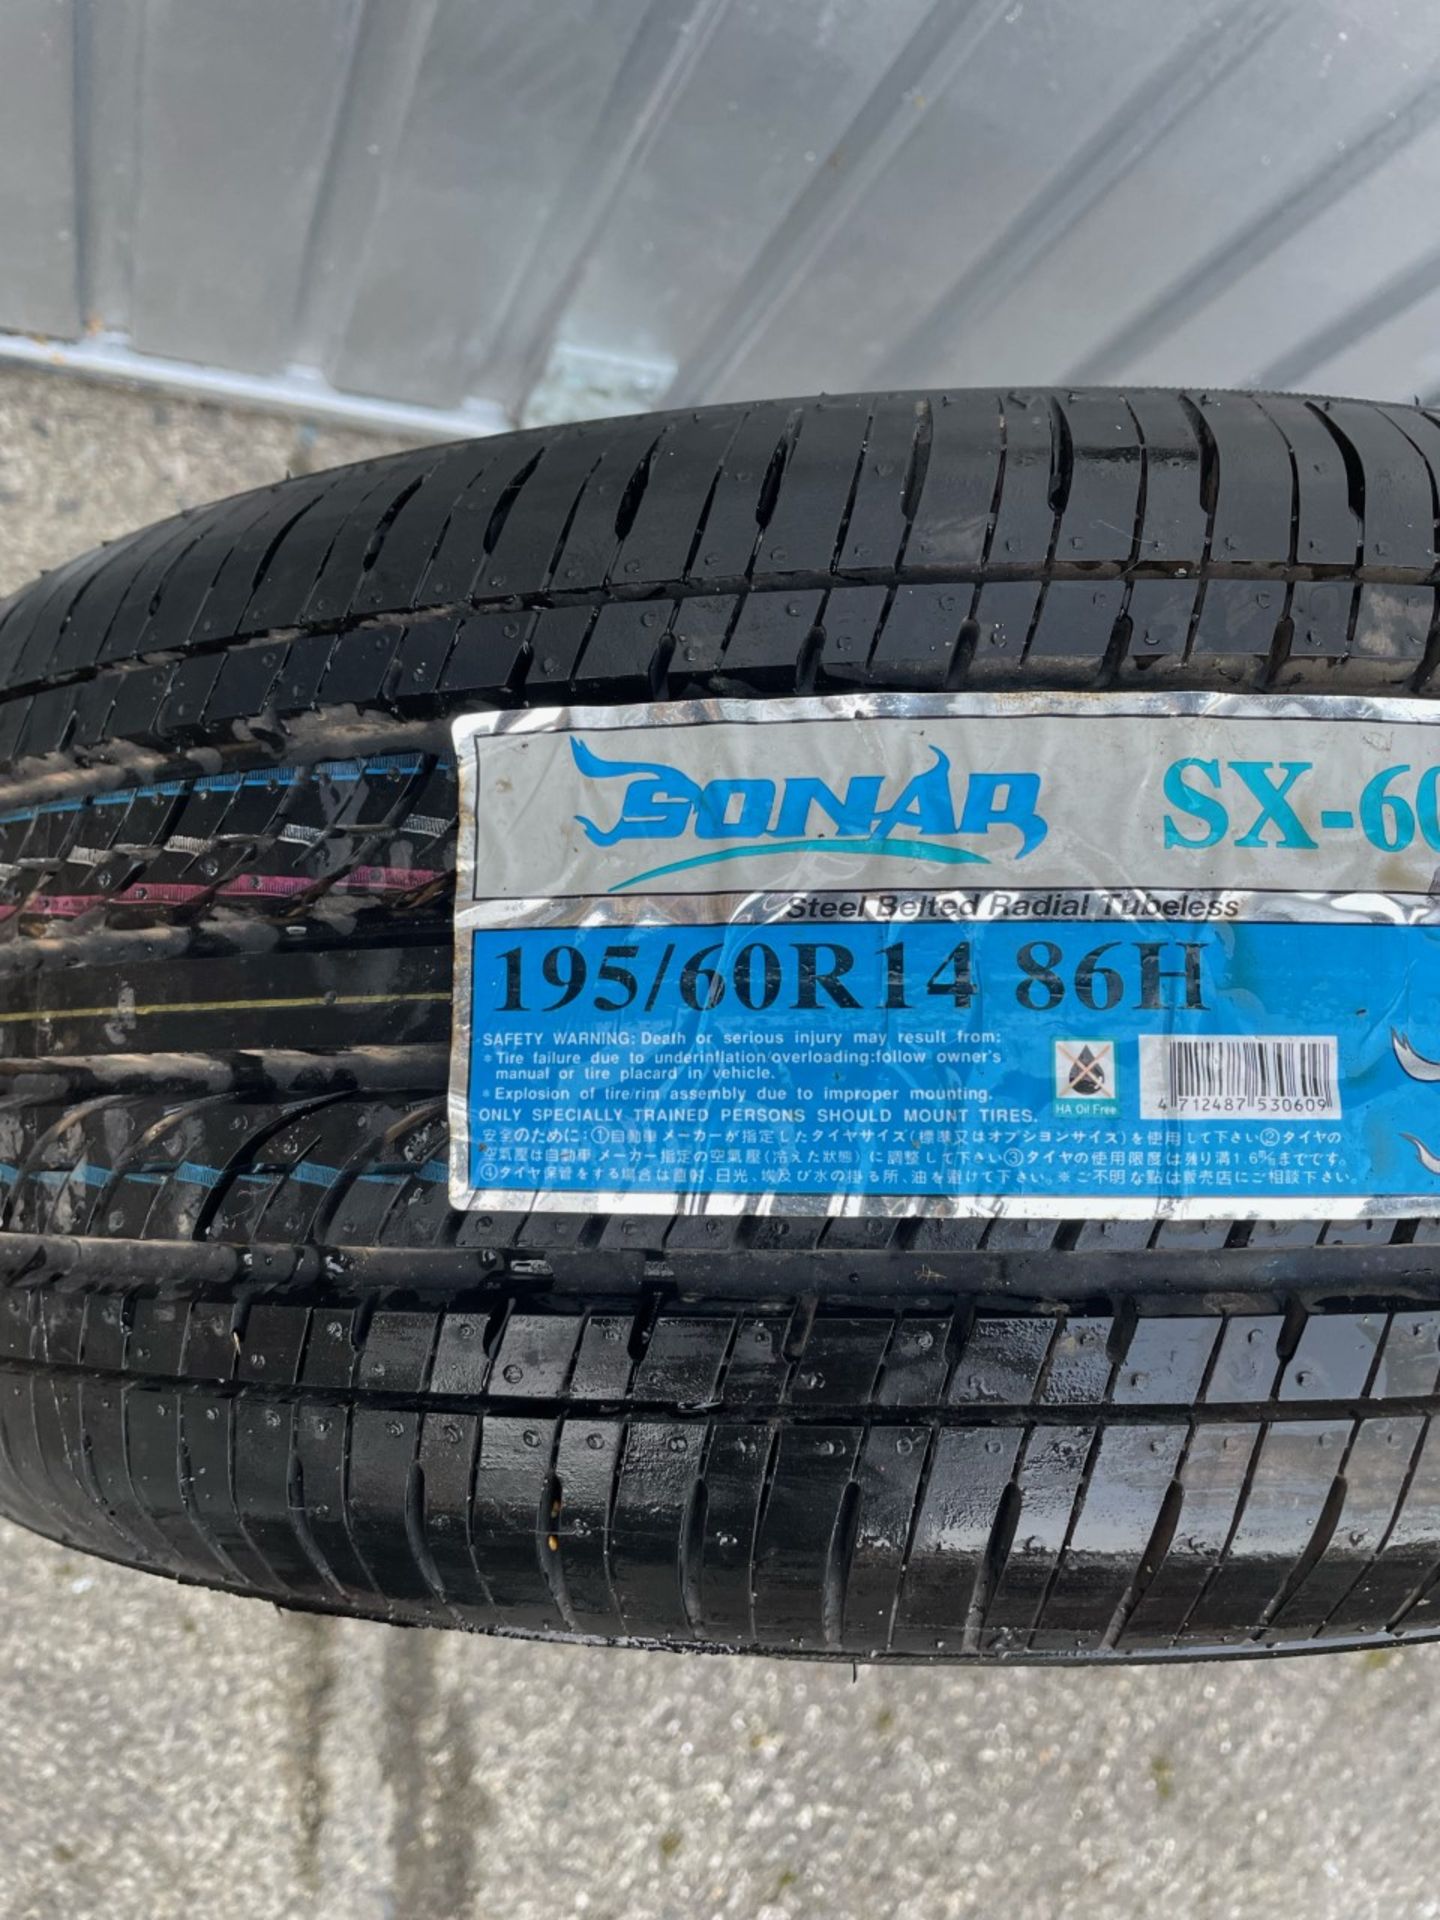 Sonar SX-608 195/60R14 86H tyre. New